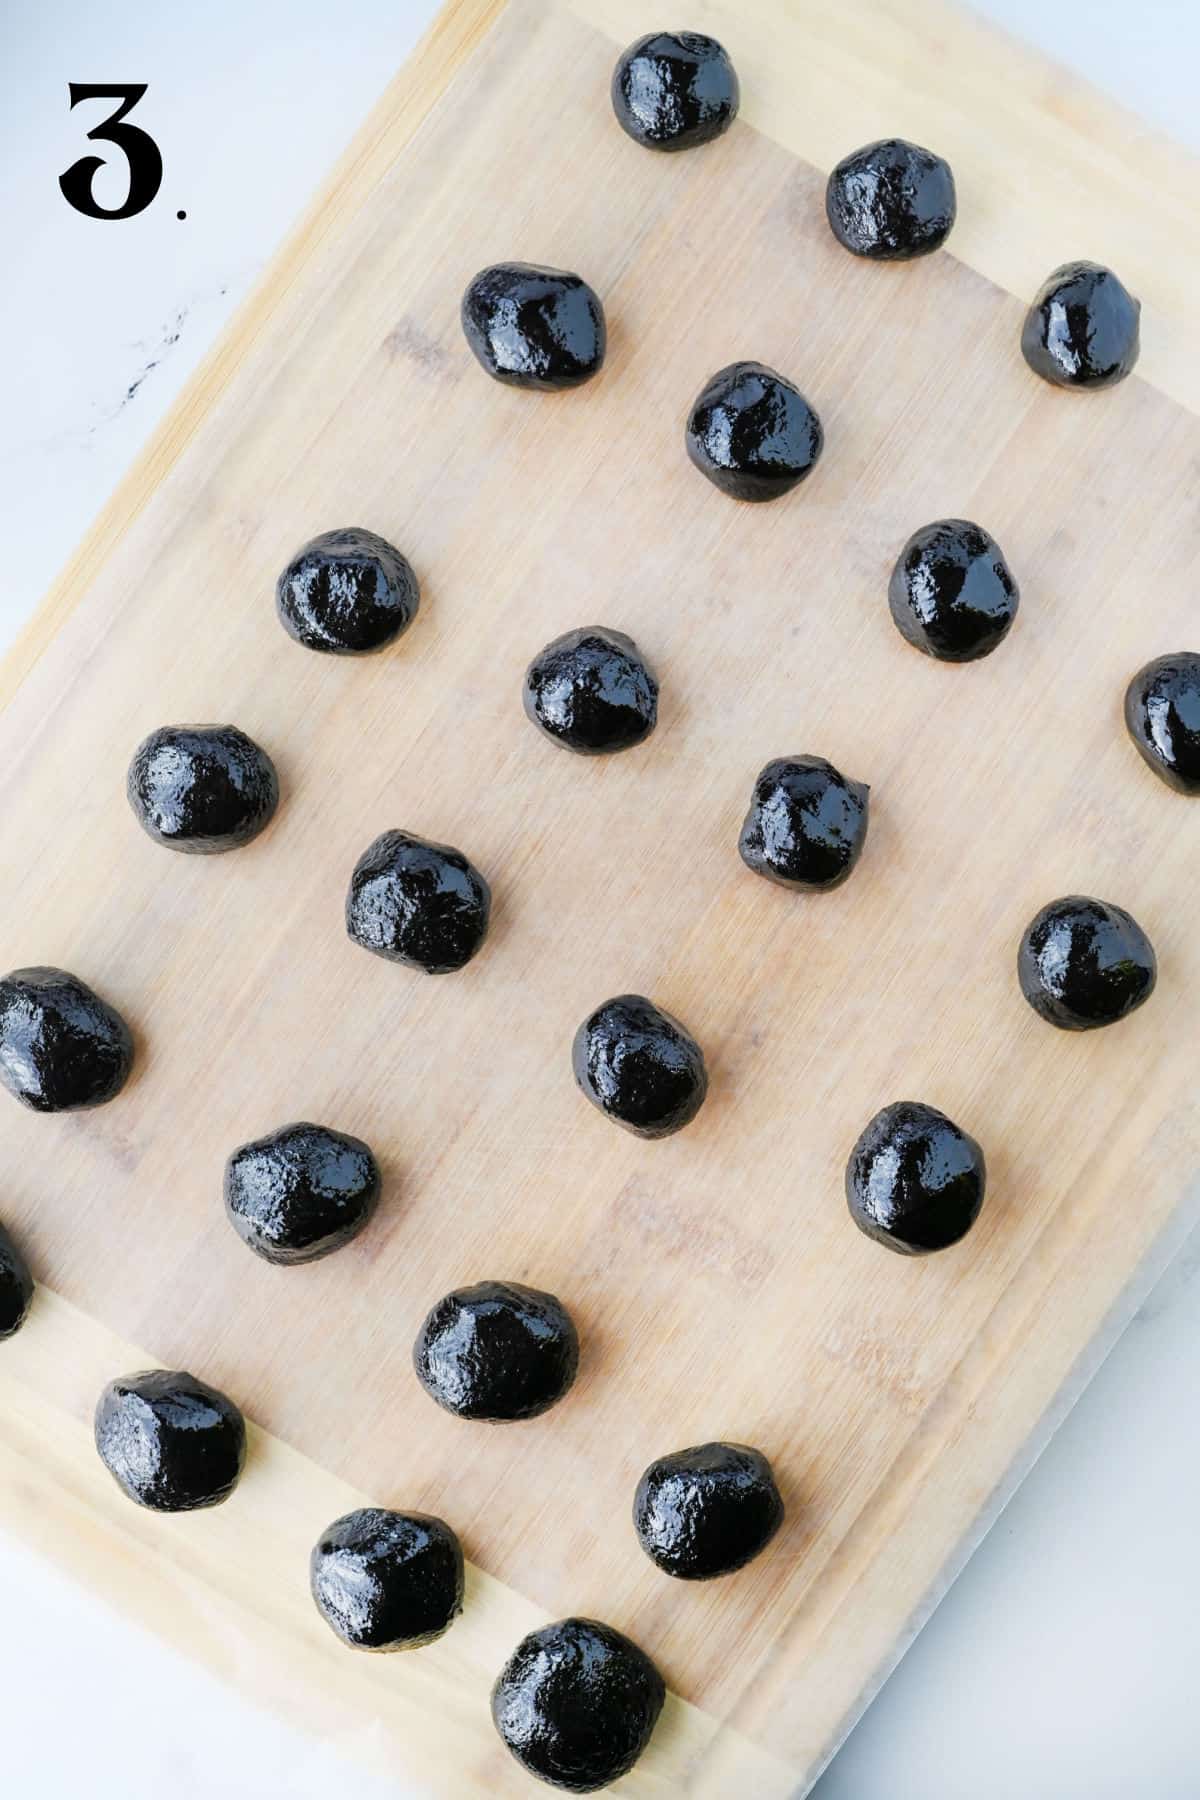 How to Make Oreo Truffles - Step 3 oreo balls on baking sheet.